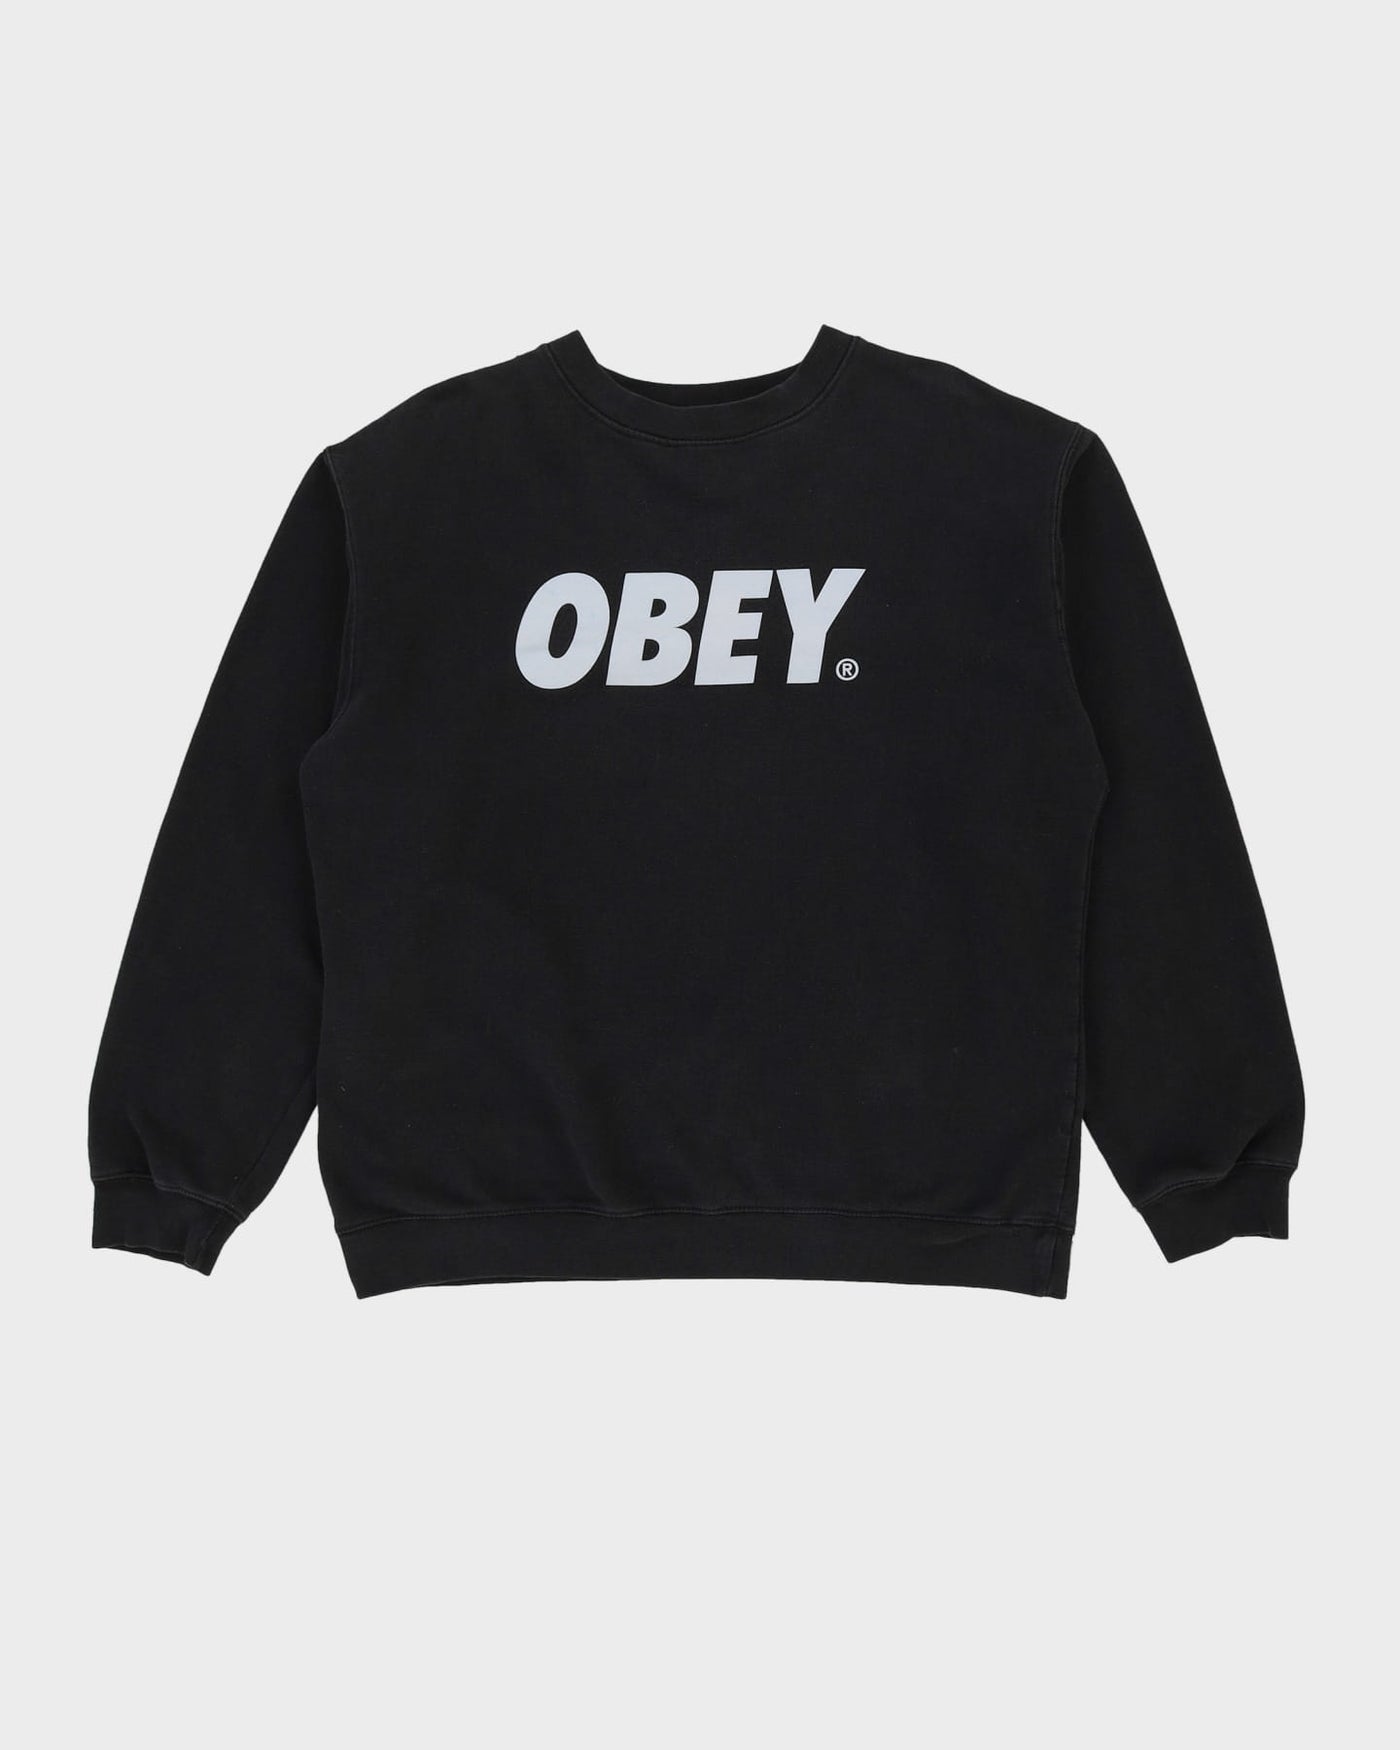 Obey Black Spell Out Sweatshirt - XL